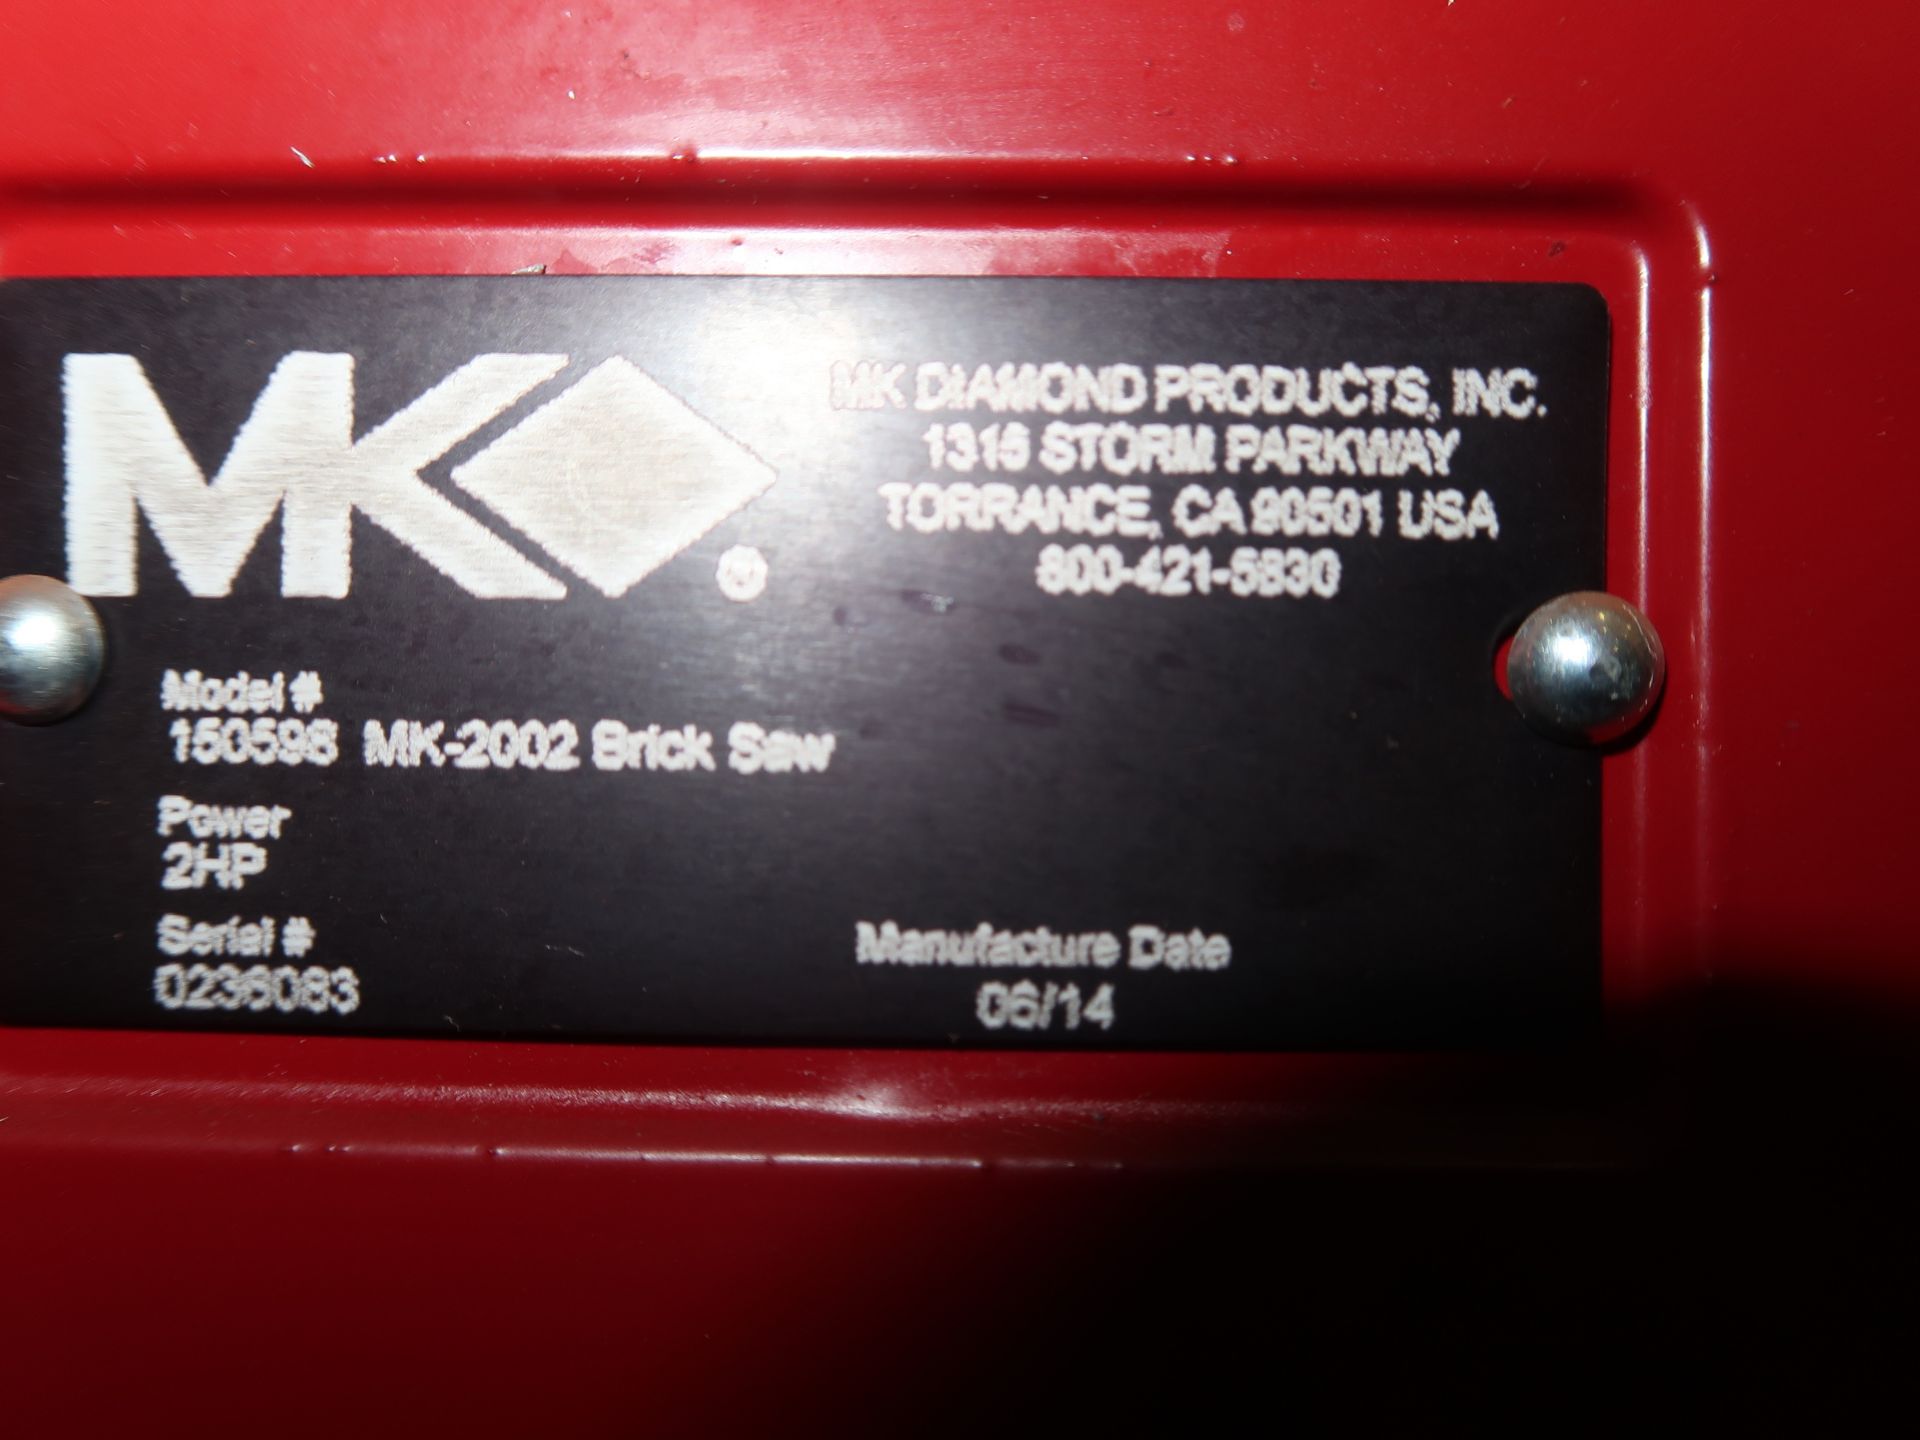 MK brick saw, model MK-2002 - Image 3 of 3